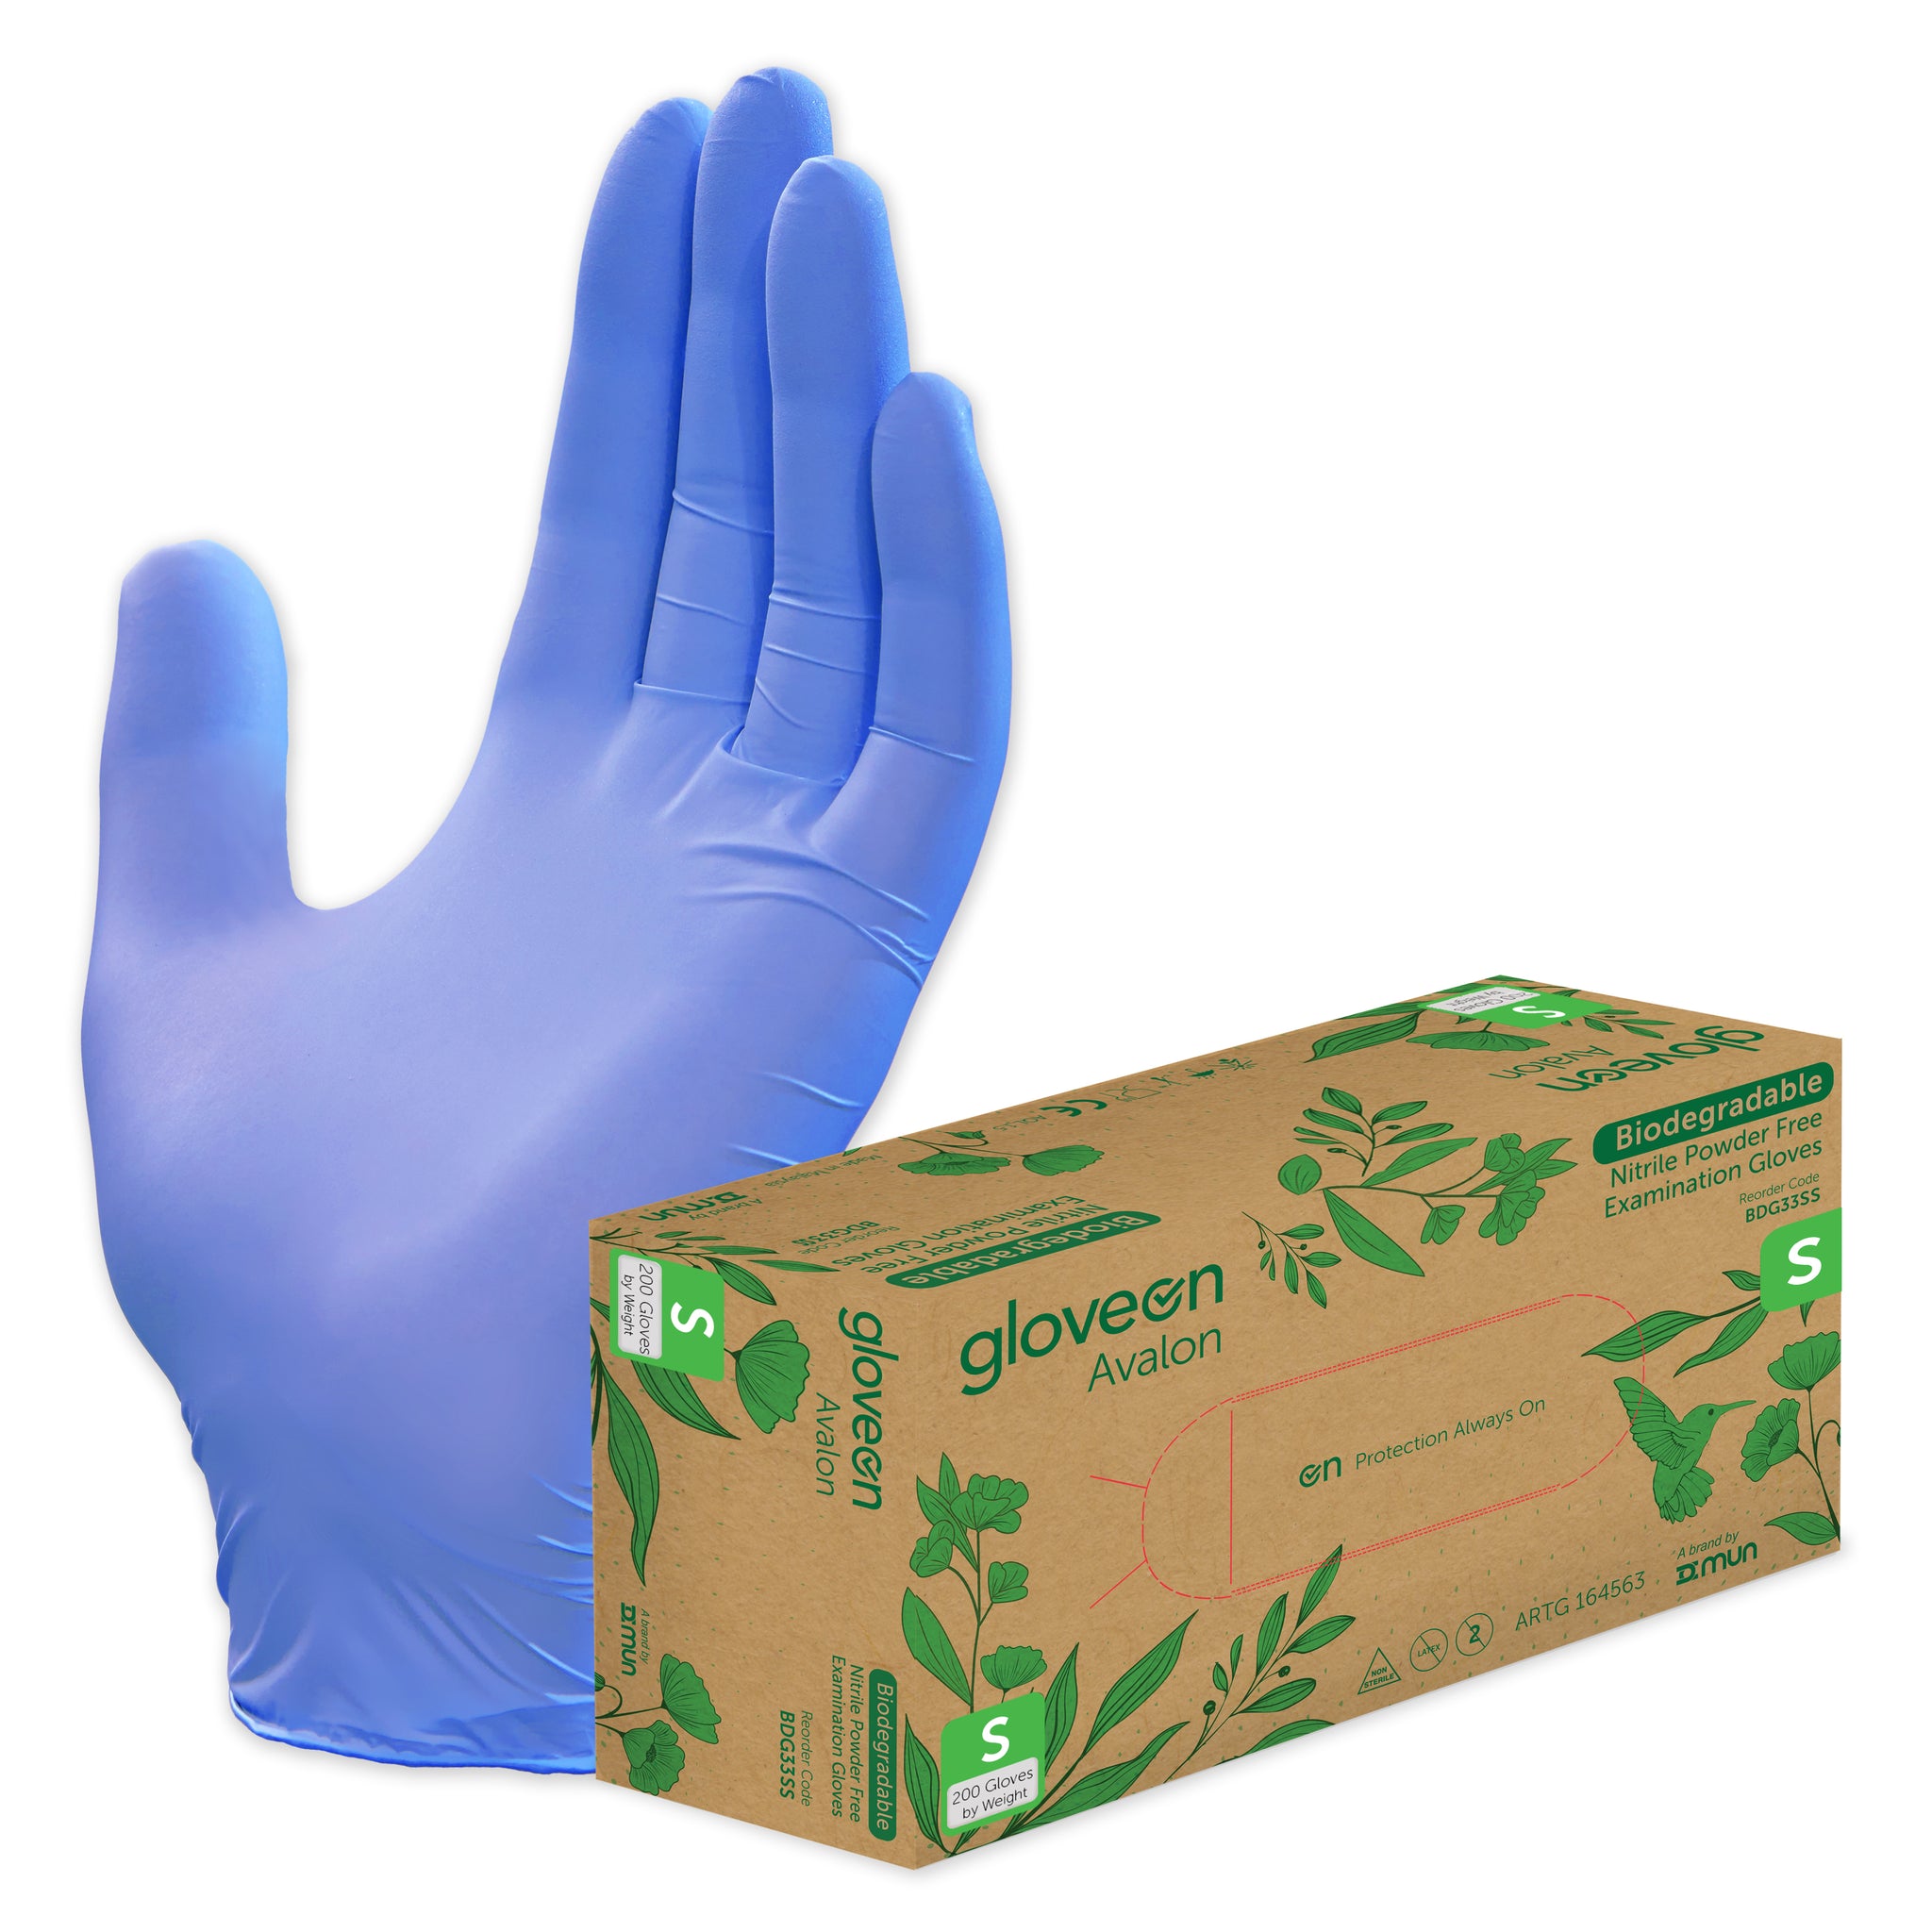 Biodegradable Nitrile Exam Gloves, Powder Free, Non-Sterile, Fingertip Textured, Standard Cuff, Violet Blue - Box of 200, S